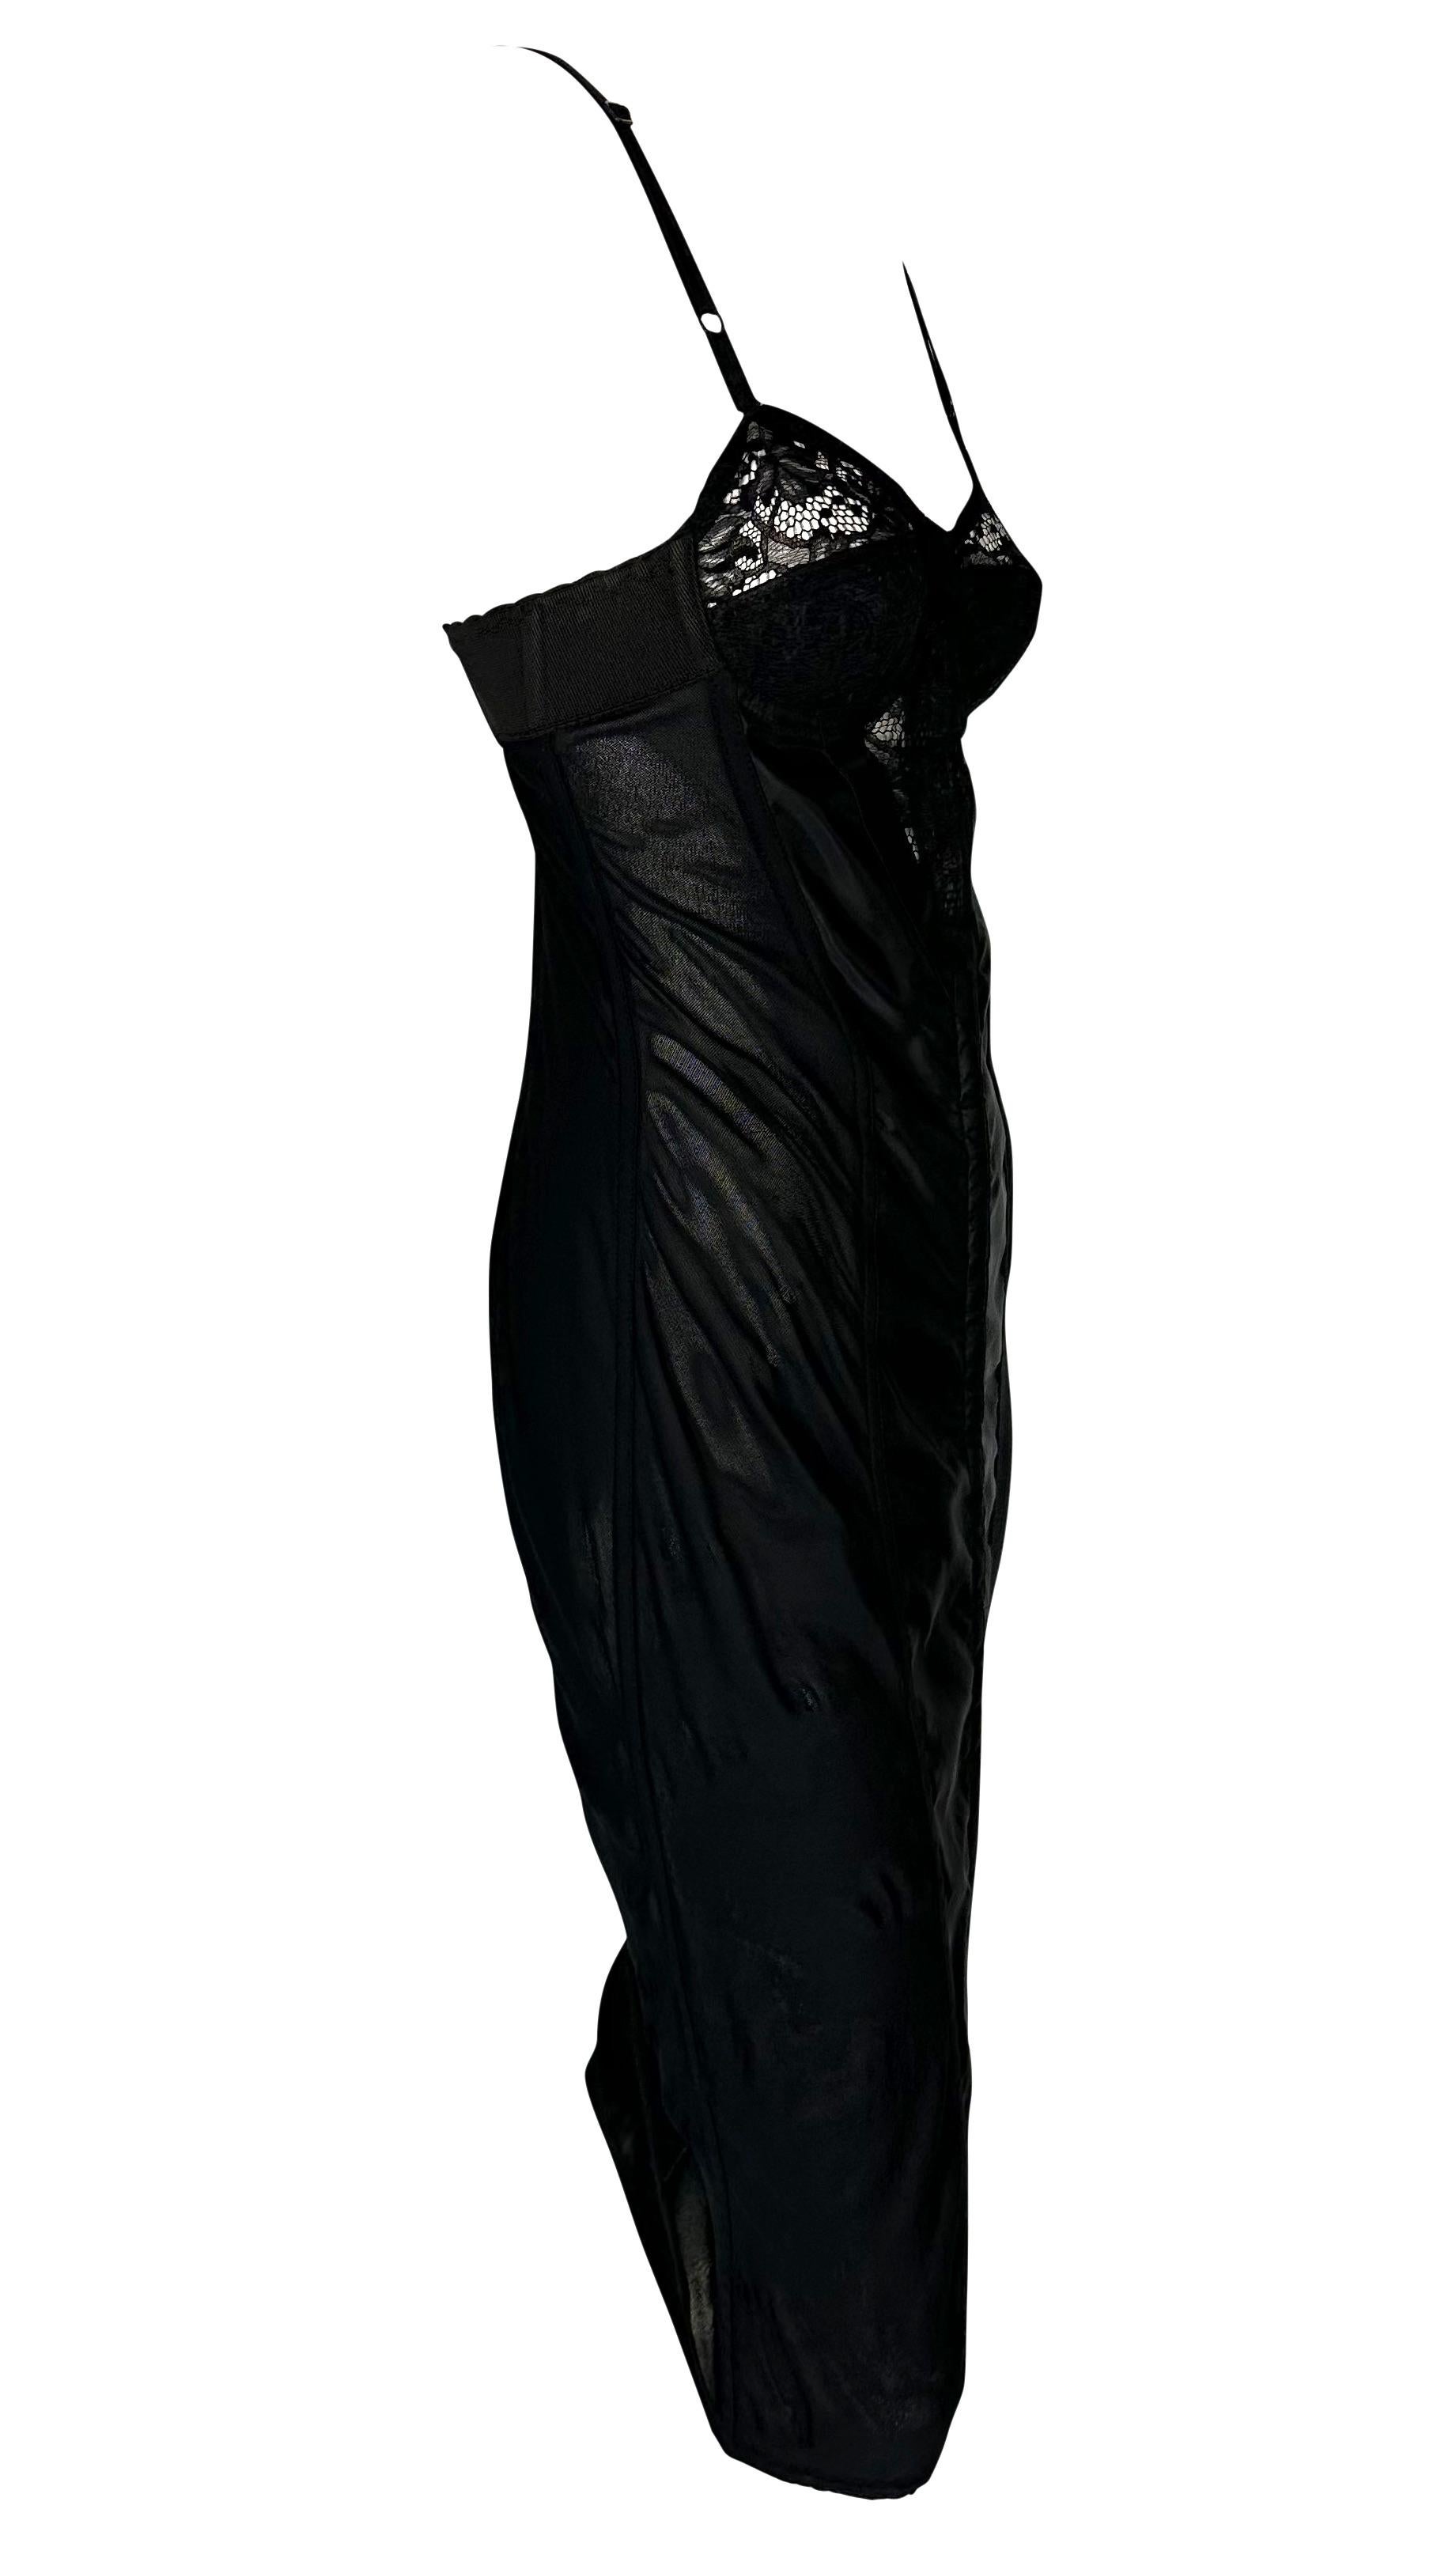 S/S 2003 Dolce & Gabbana 'Sex & Love' Runway Sheer Bustier Black Dress For Sale 4